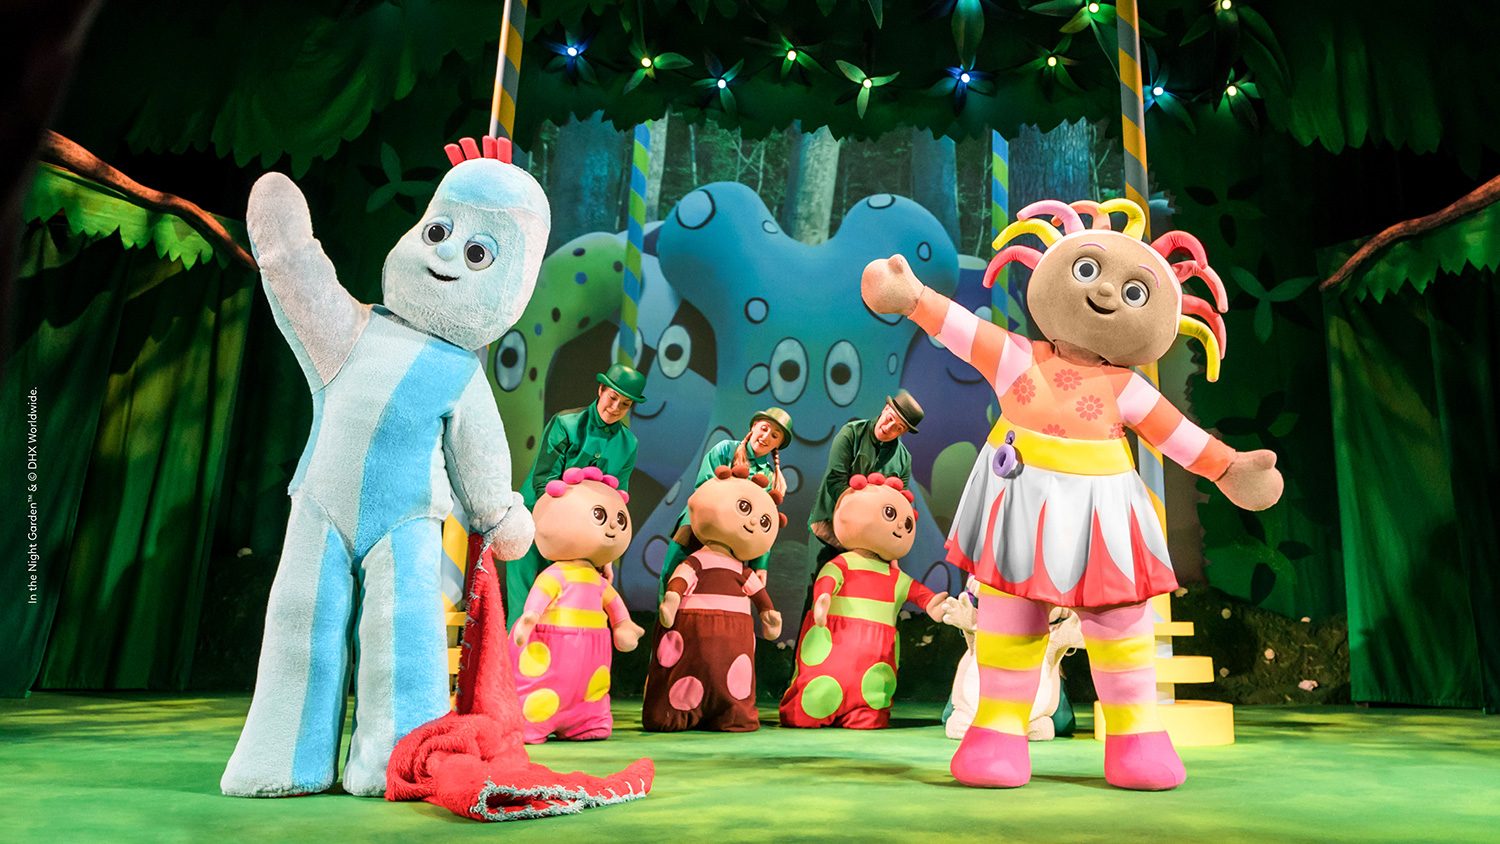 Toy Children TV Cartoon in The Night Garden Plush Toy Makka